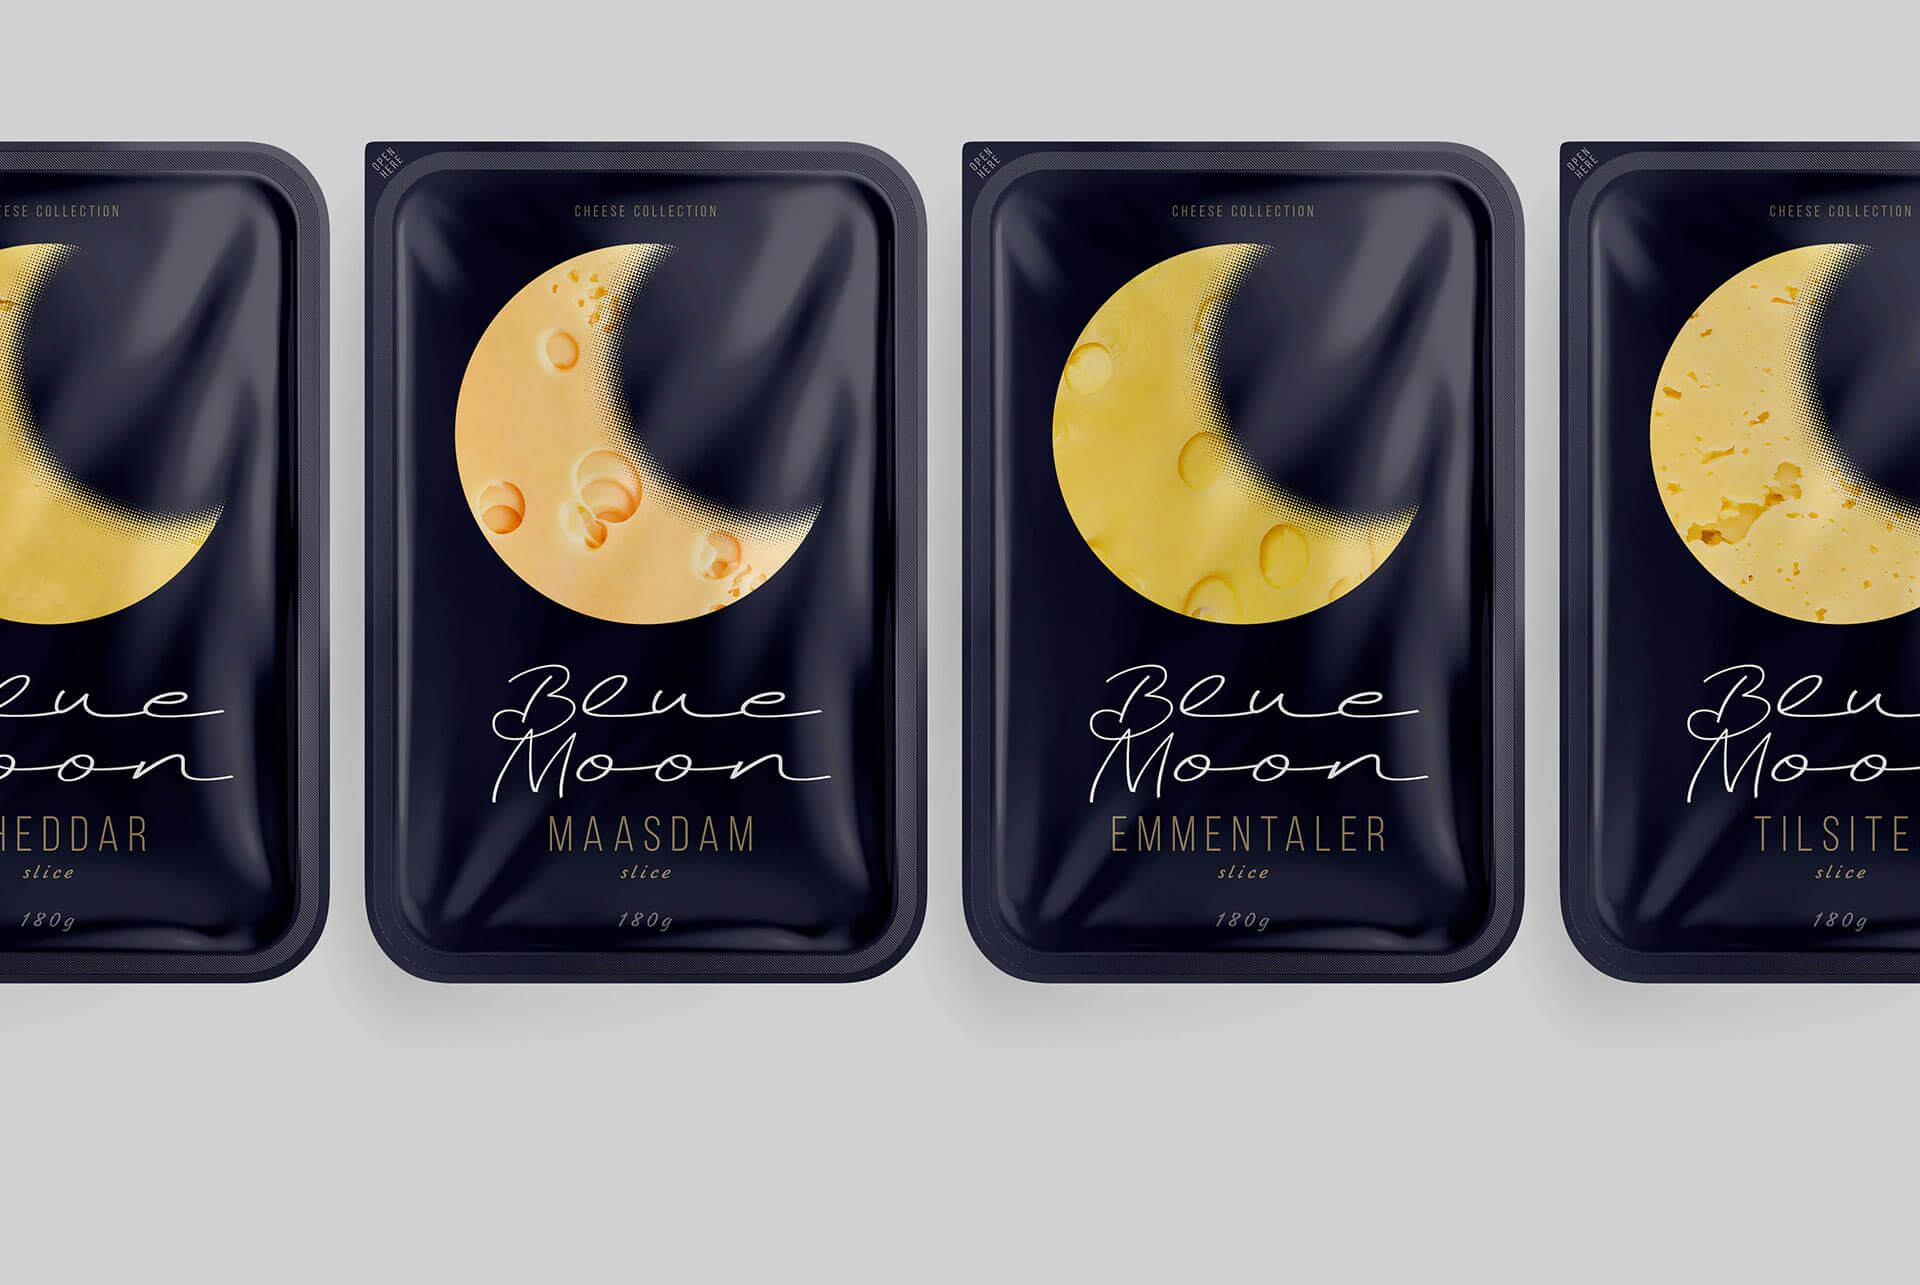 Blue Moon芝士奶酪包装设计